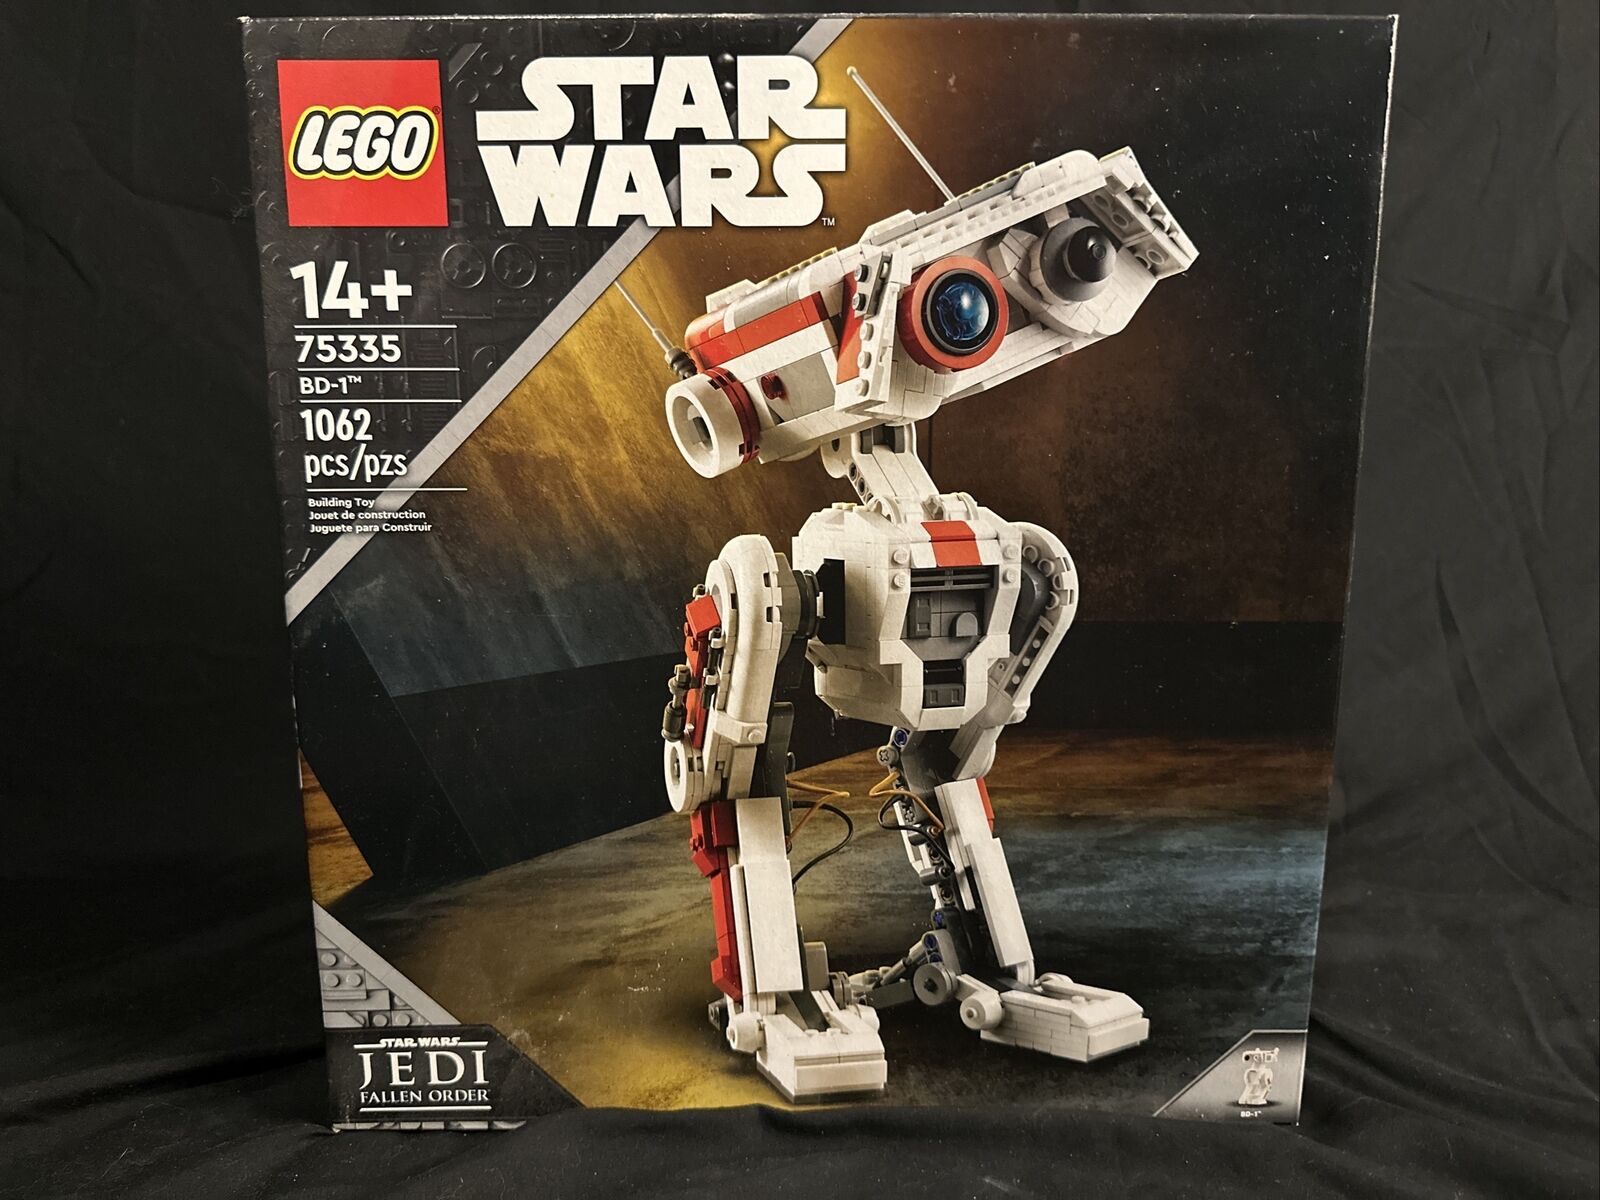 LEGO Star Wars Jedi Fallen Order BD-1 - 75335 (14+) - New SEALED